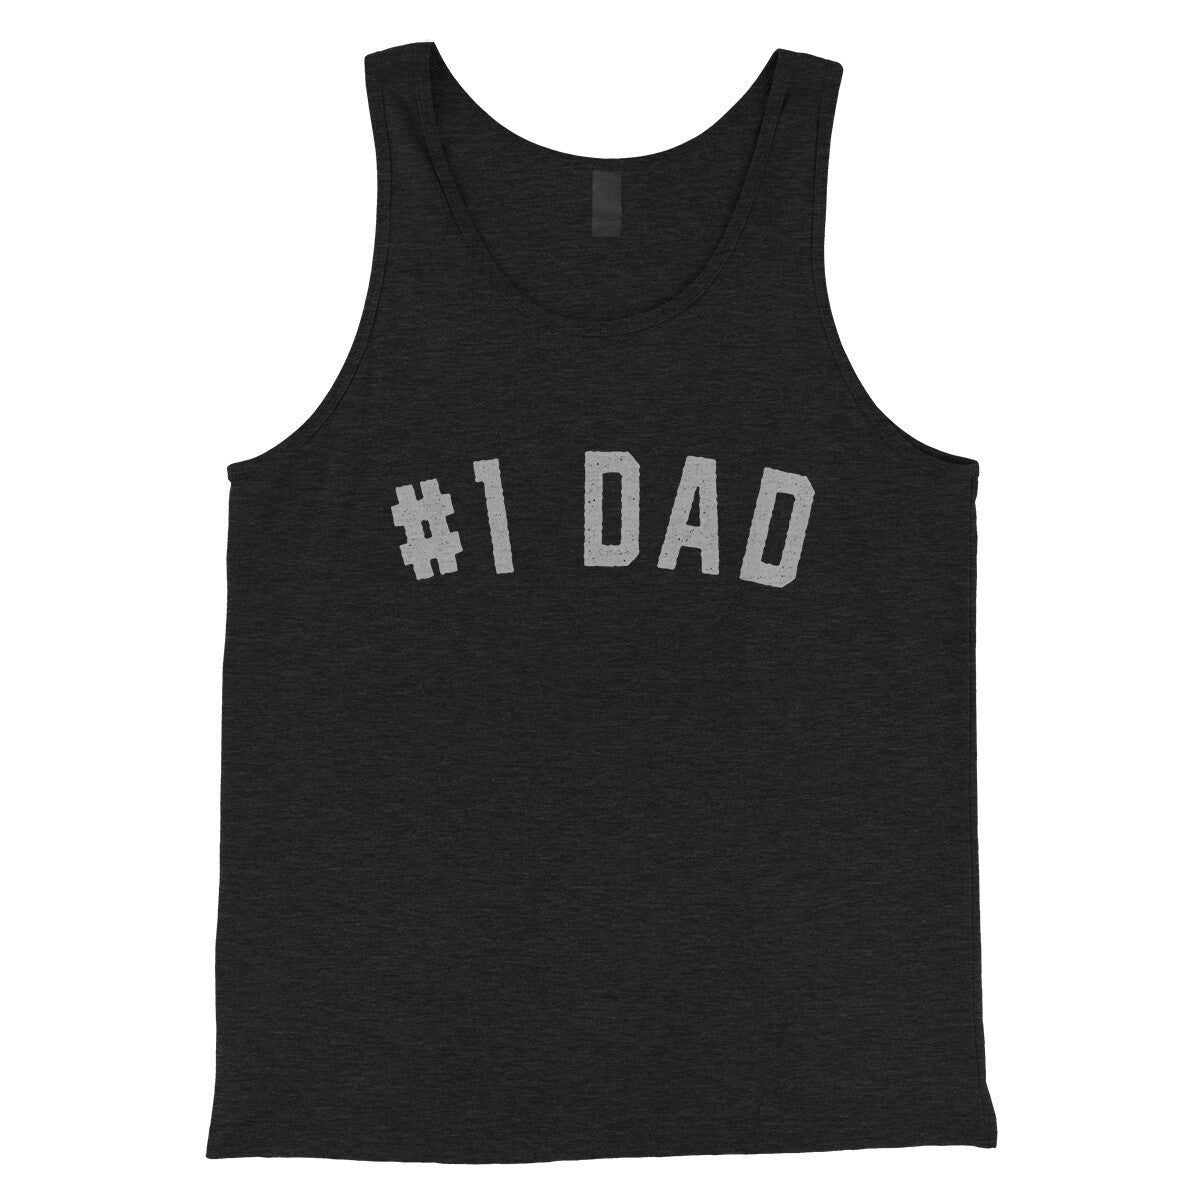 Number 1 Dad in Charcoal Black TriBlend Color